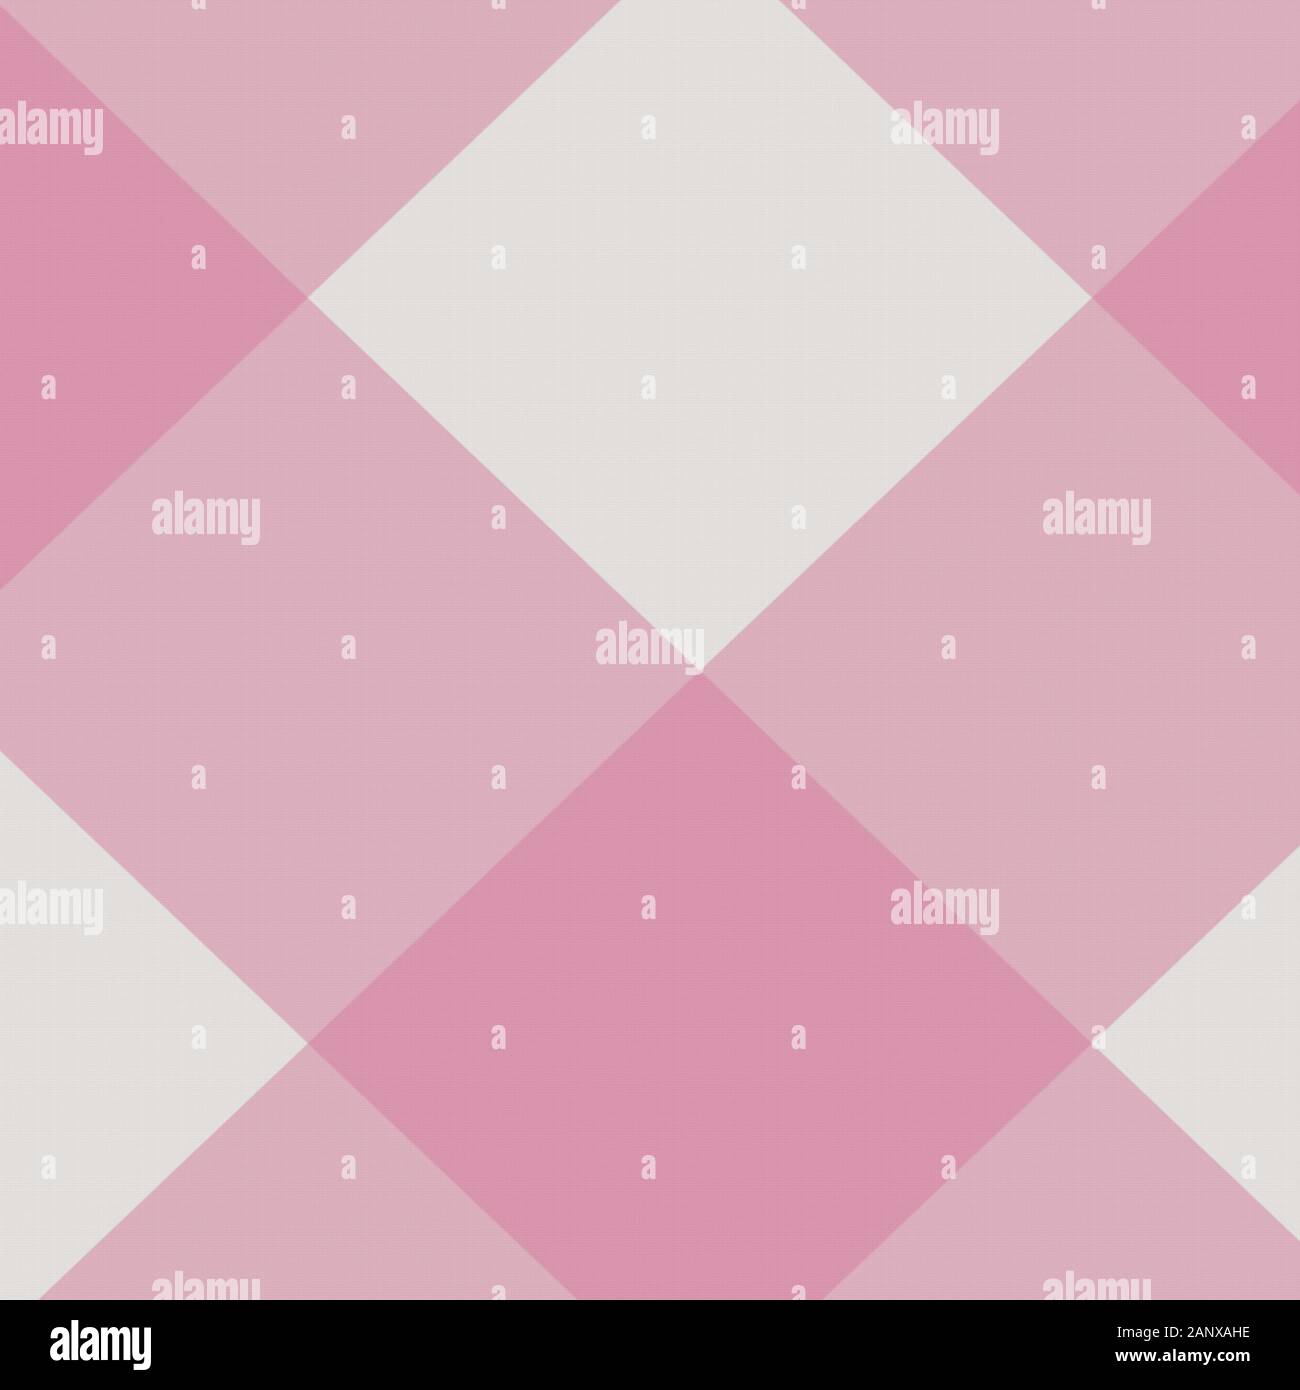 Twill pink and cream buffalo plaid diagonal background in larger pattern Scottish tartan.  12x12 digital paper backdrops in geometric diamond shapes i Stock Photo